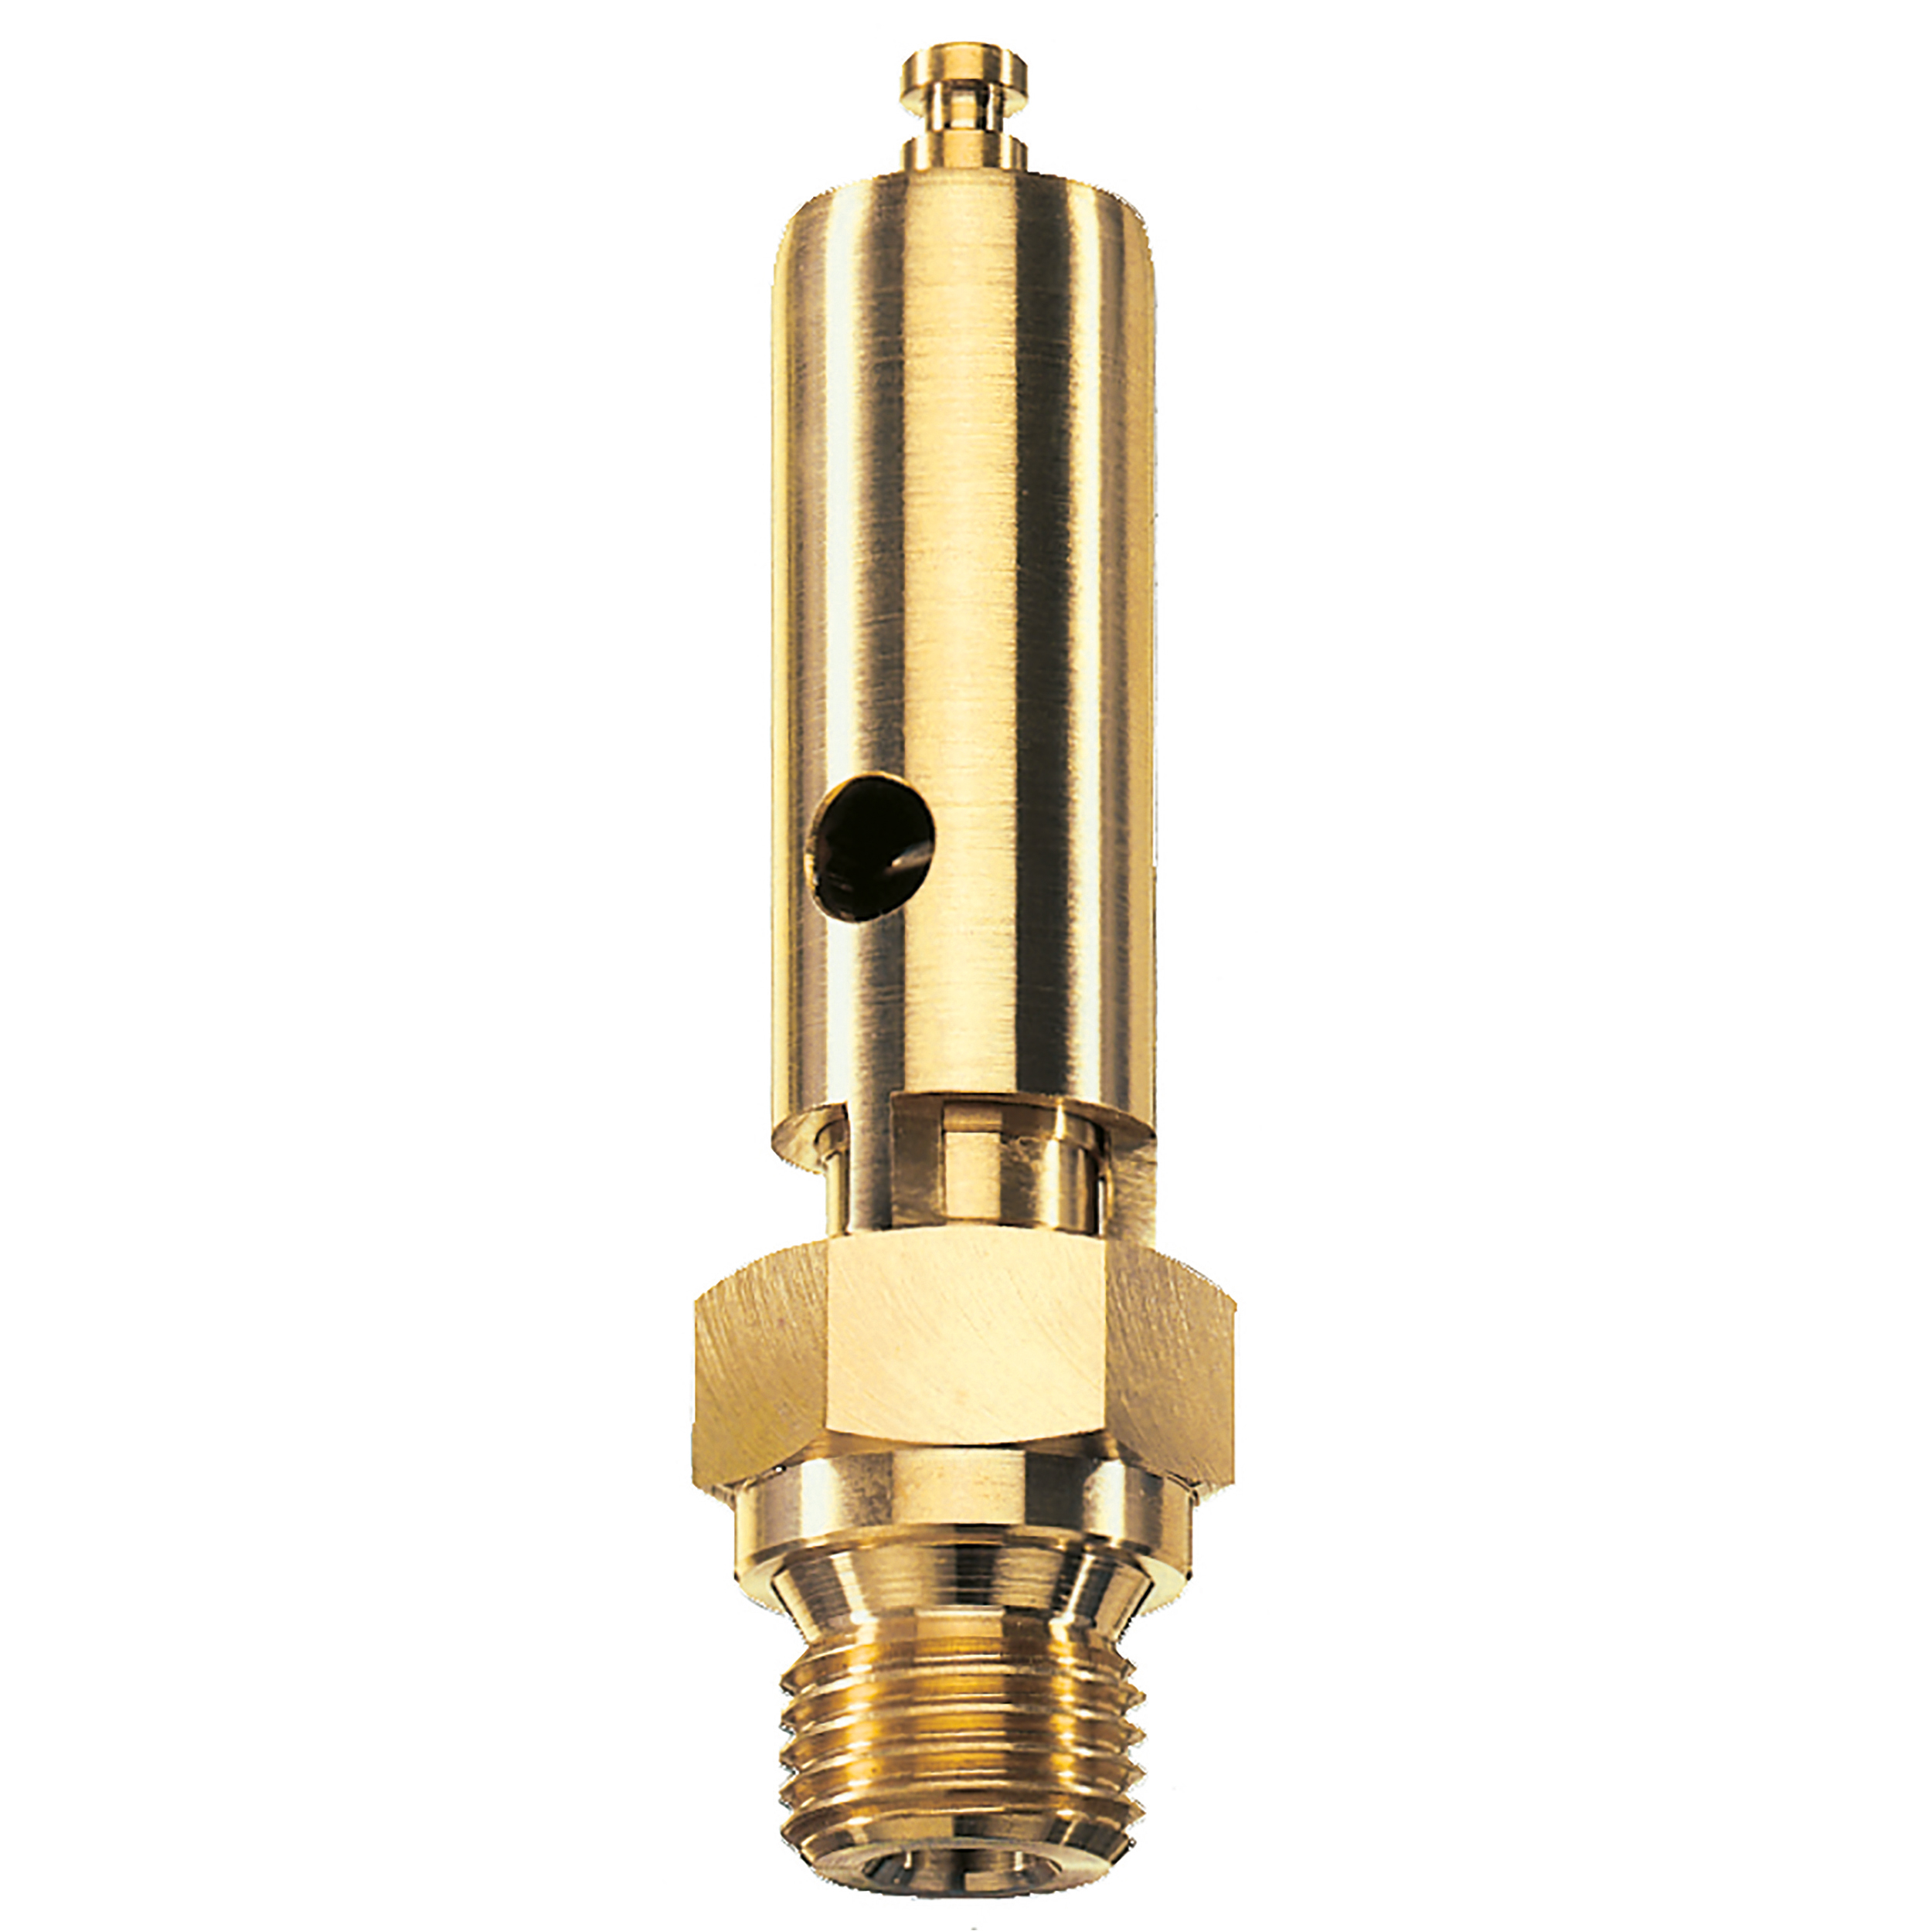 Component-tested safety valve DN 6, G⅜, pressure: 13.1-18 bar